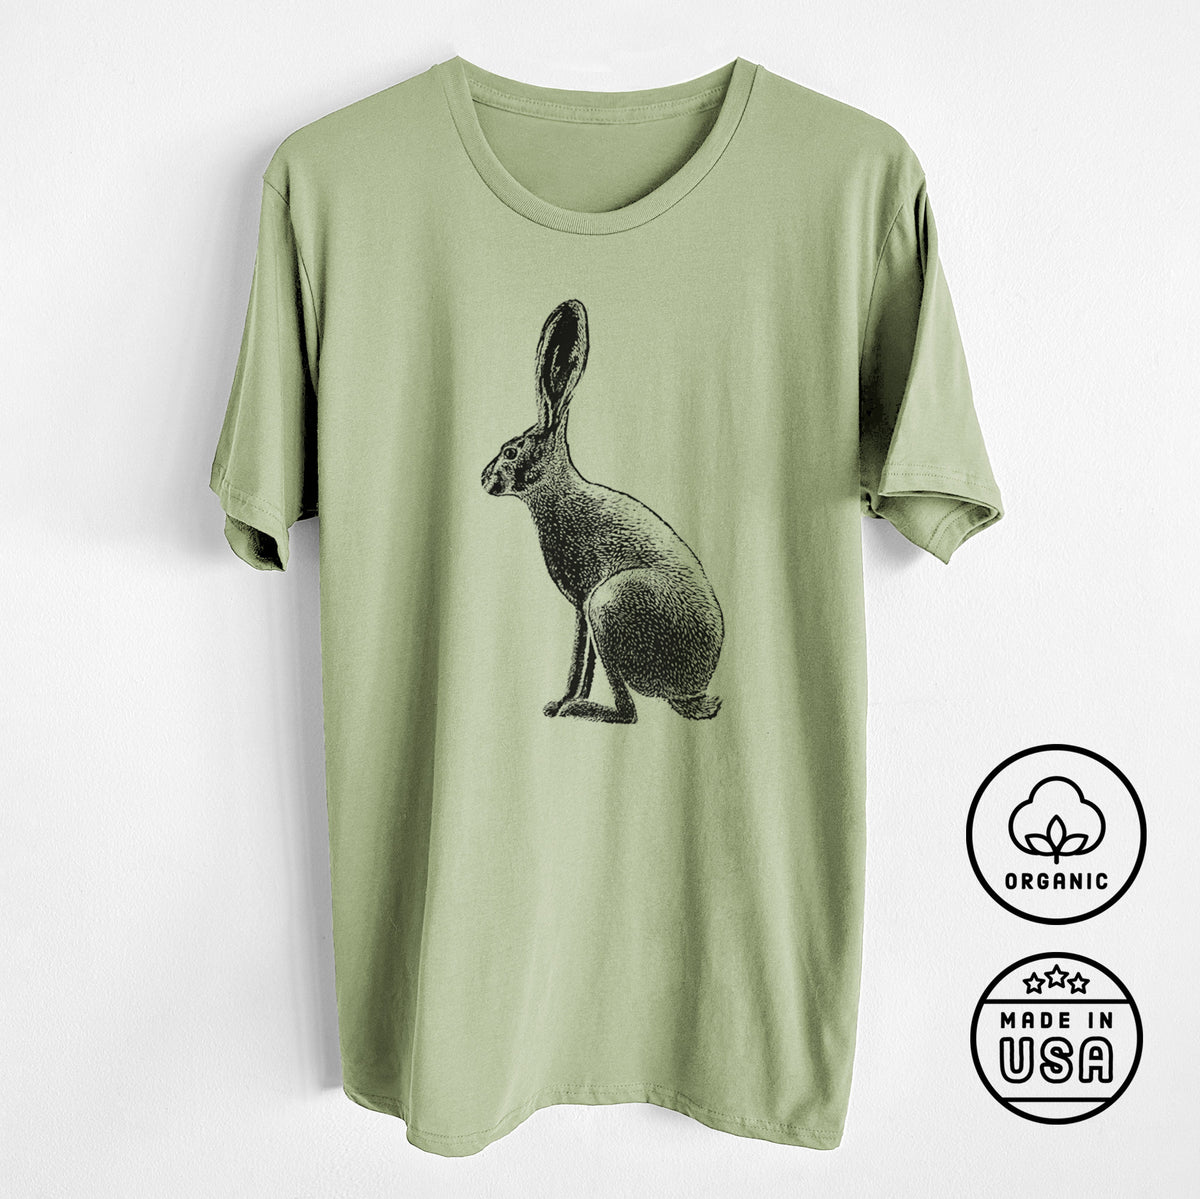 Wild California Hare - Black-tailed Jackrabbit - Unisex Crewneck - Made in USA - 100% Organic Cotton